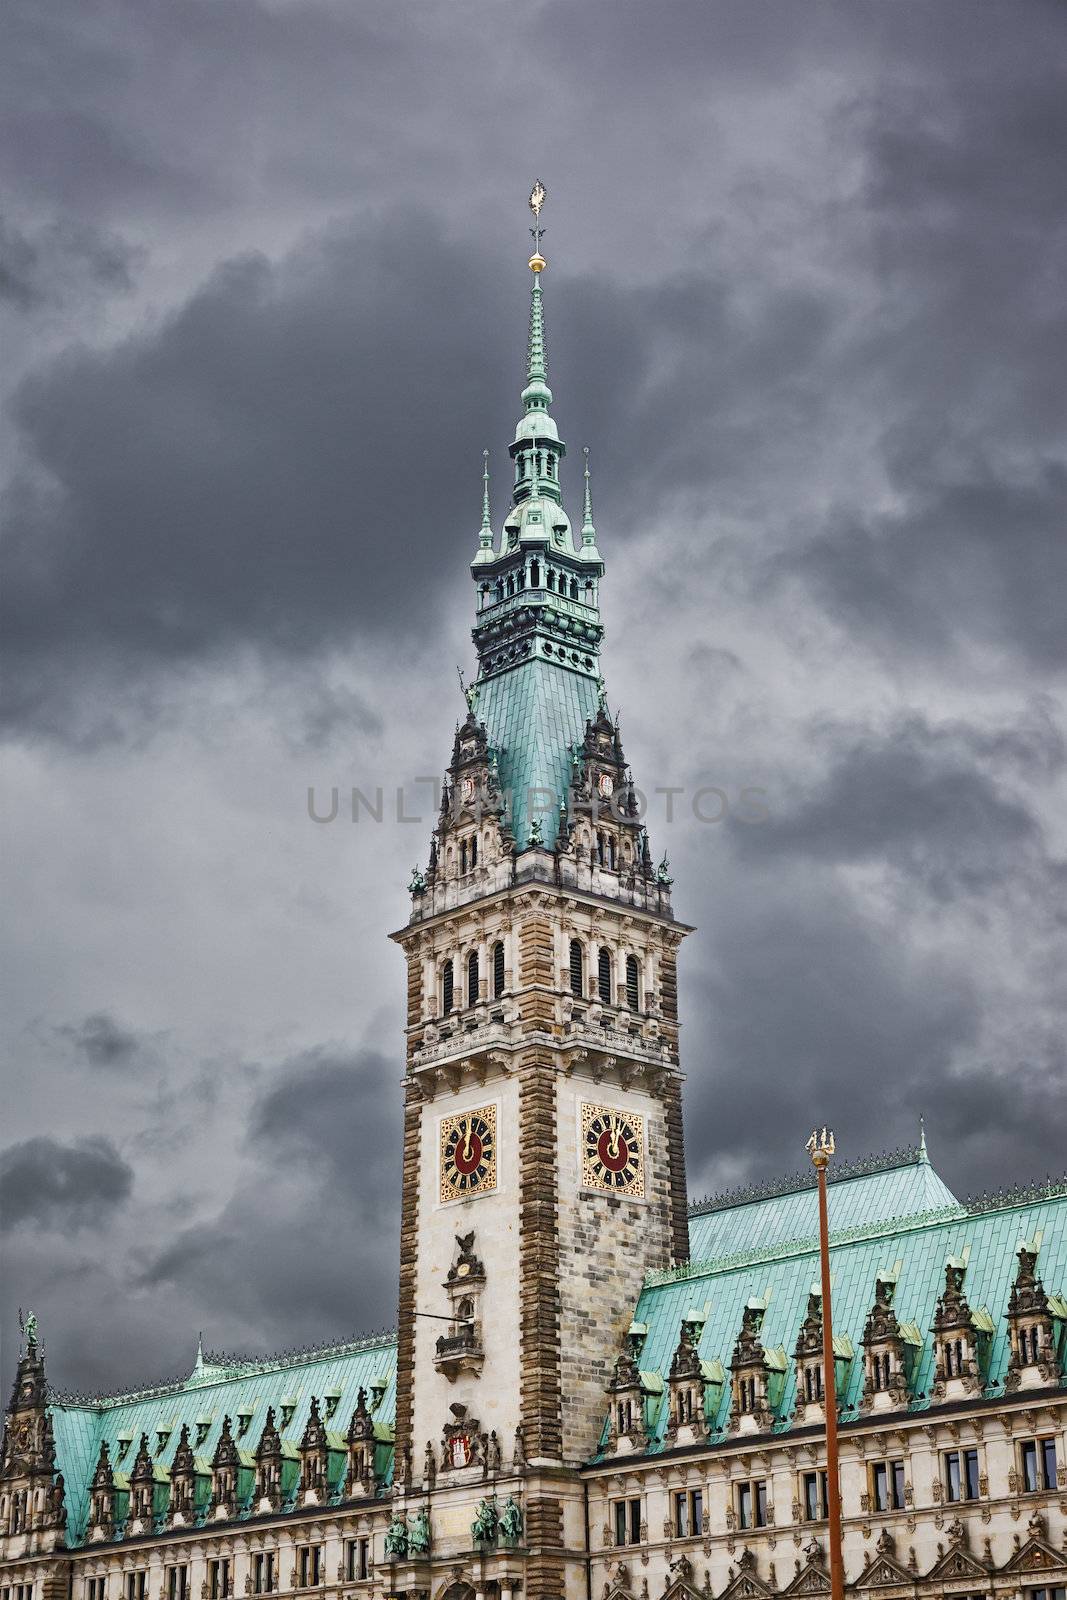 An image of the Hamburg city hall